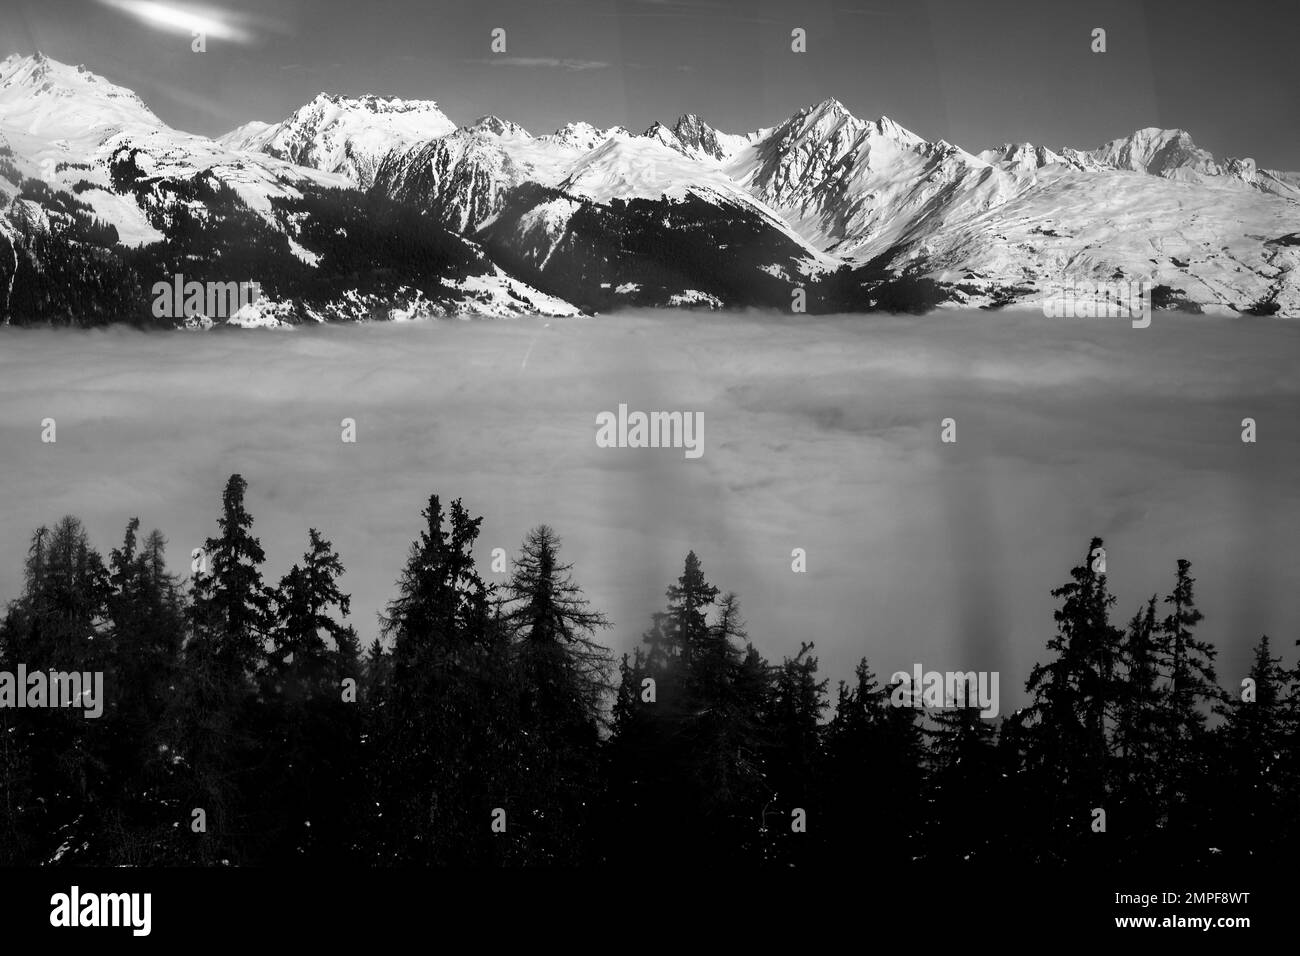 Michael Bunel / Le Pictorium -  Skiing in the Alps -  5/1/2016  -  Savoie / France / La plagne  -  ski holiday illustration. 23 January 2023. La plagn Stock Photo